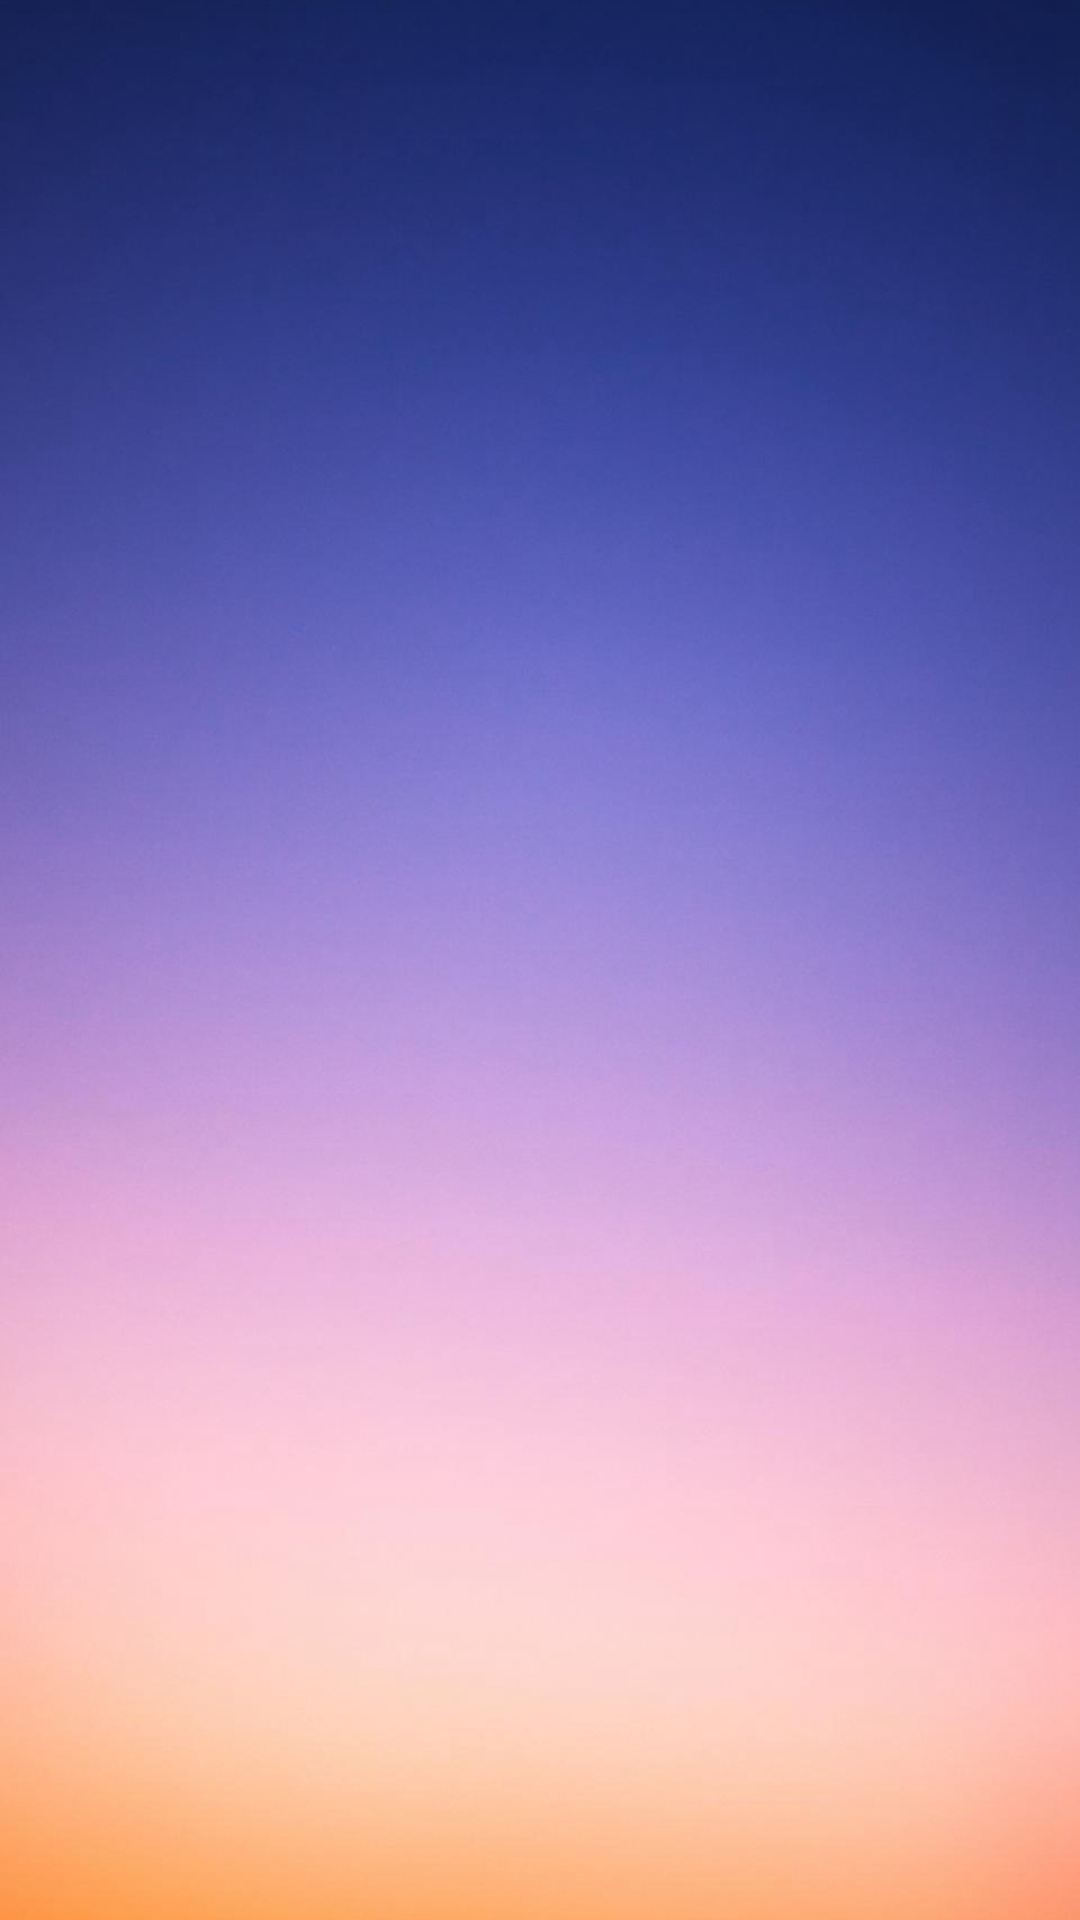 Ios8 Theme Color Gradation Blur Background iPhone Wallpaper